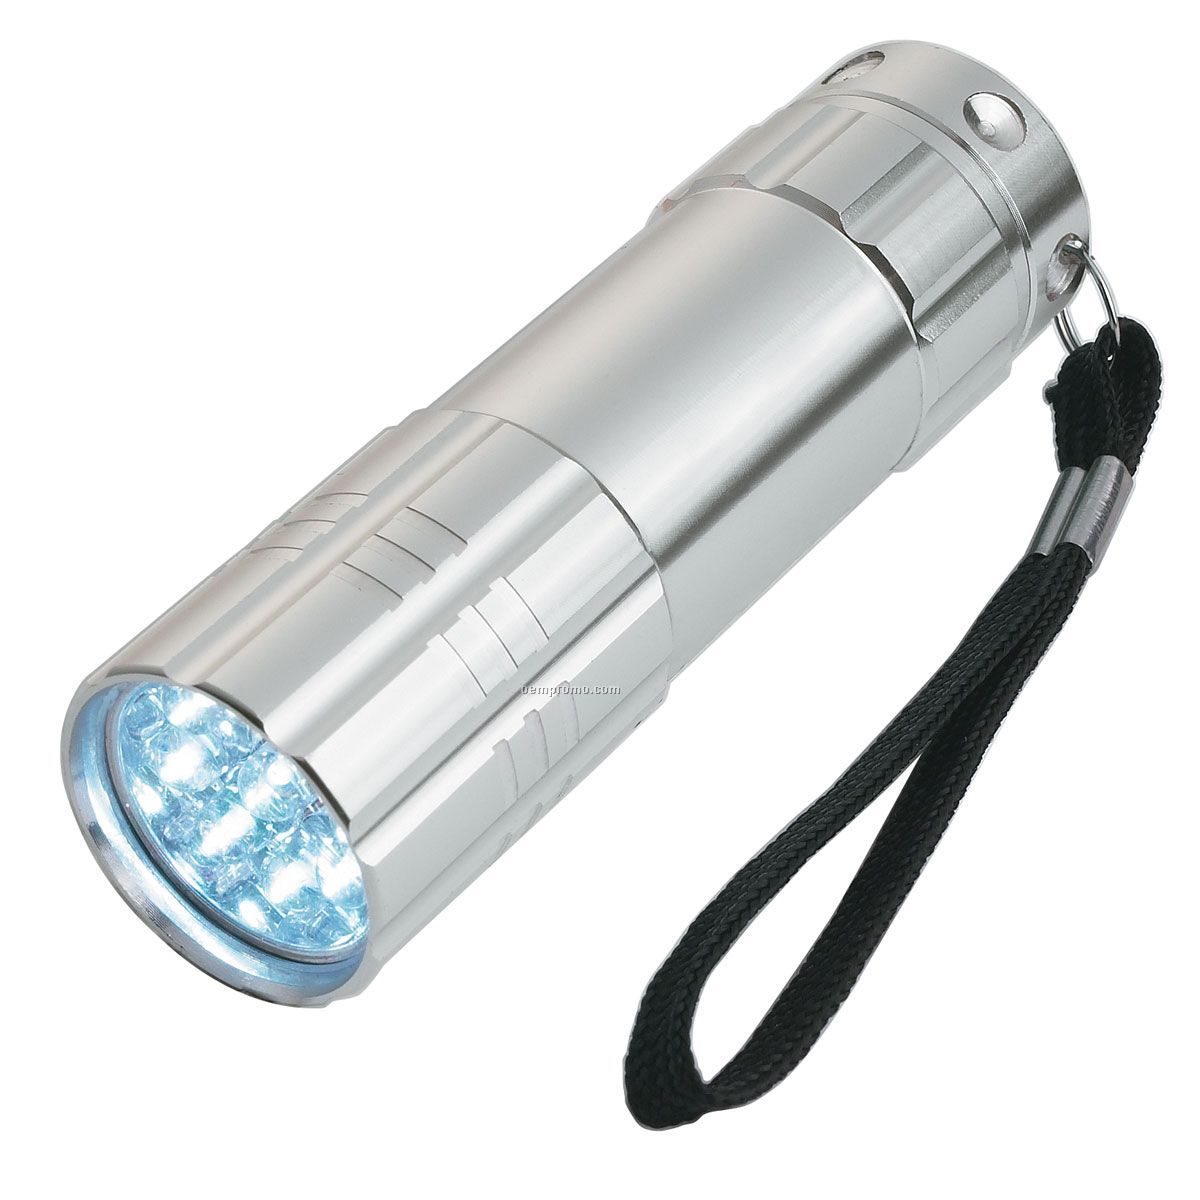 Light Up Flashlight W/ 9 Super Bright Leds - Silver